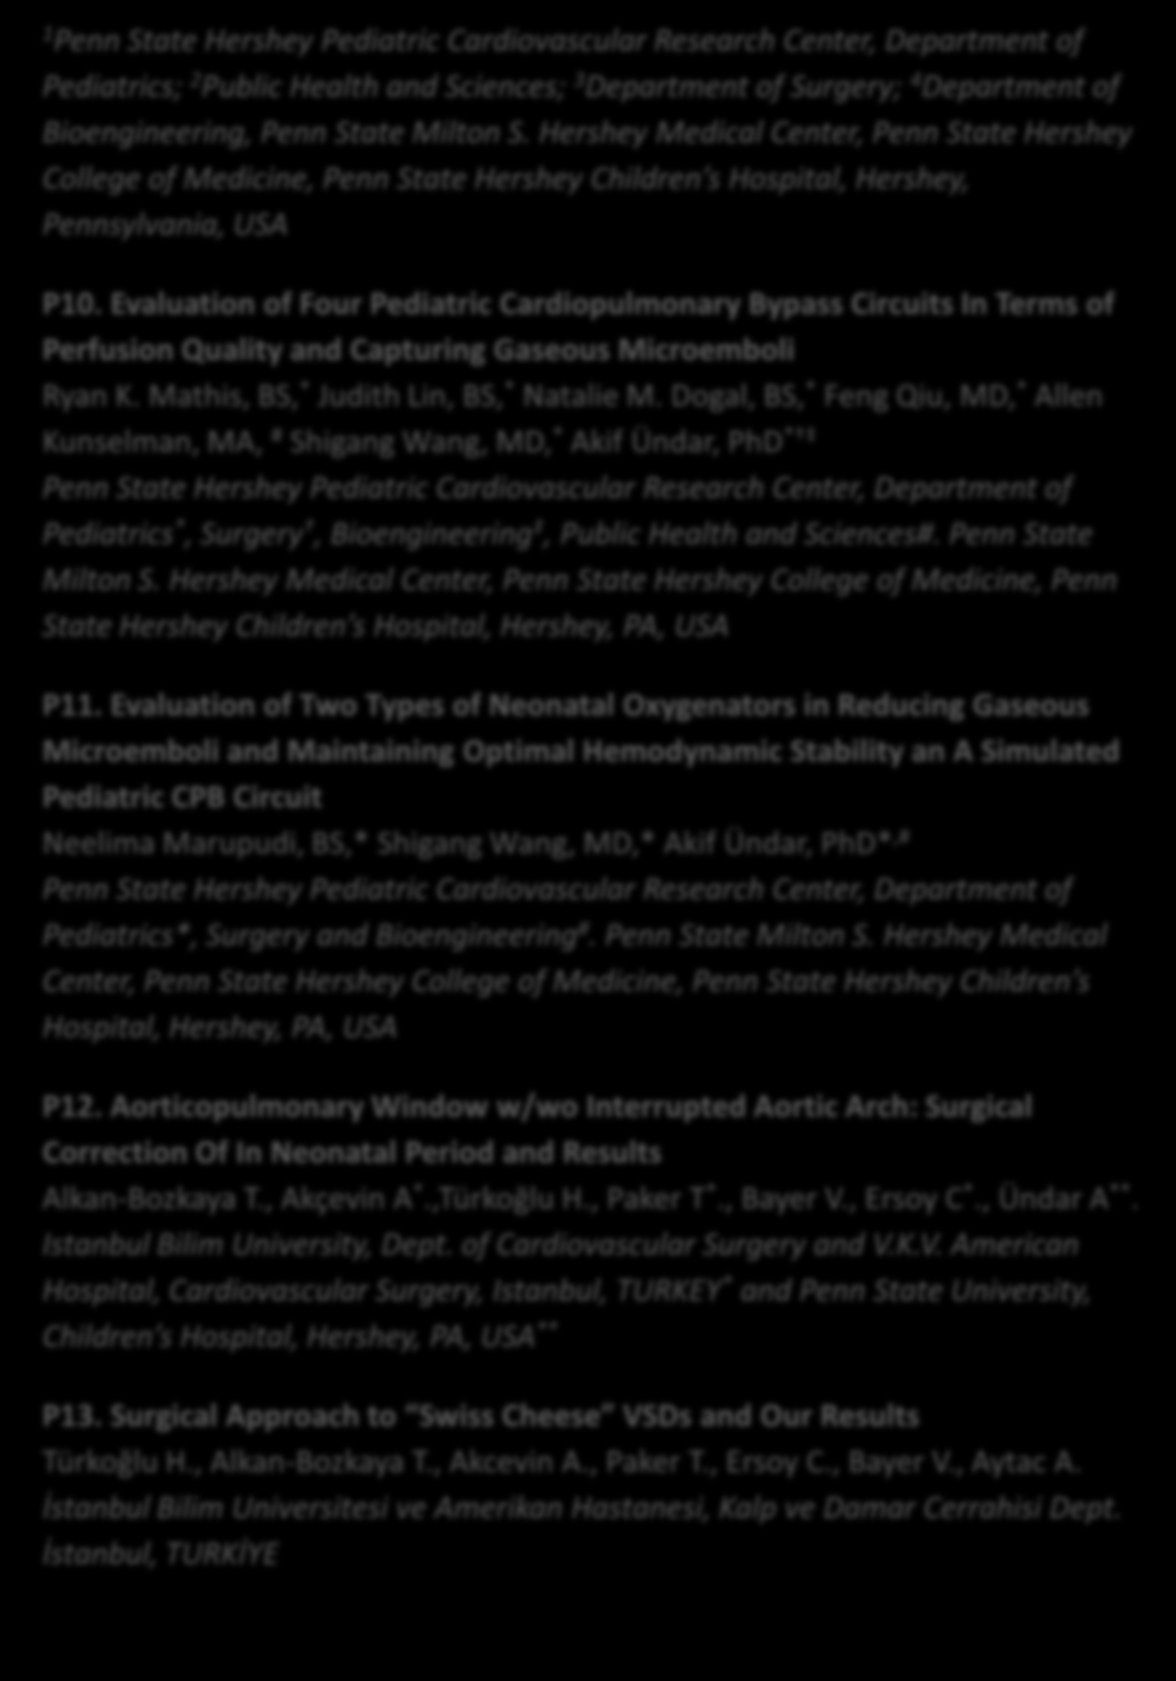 1 Pediatrics; 2 Public Health and Sciences; 3 Department of Surgery; 4 Department of Bioengineering, Penn State Milton S.